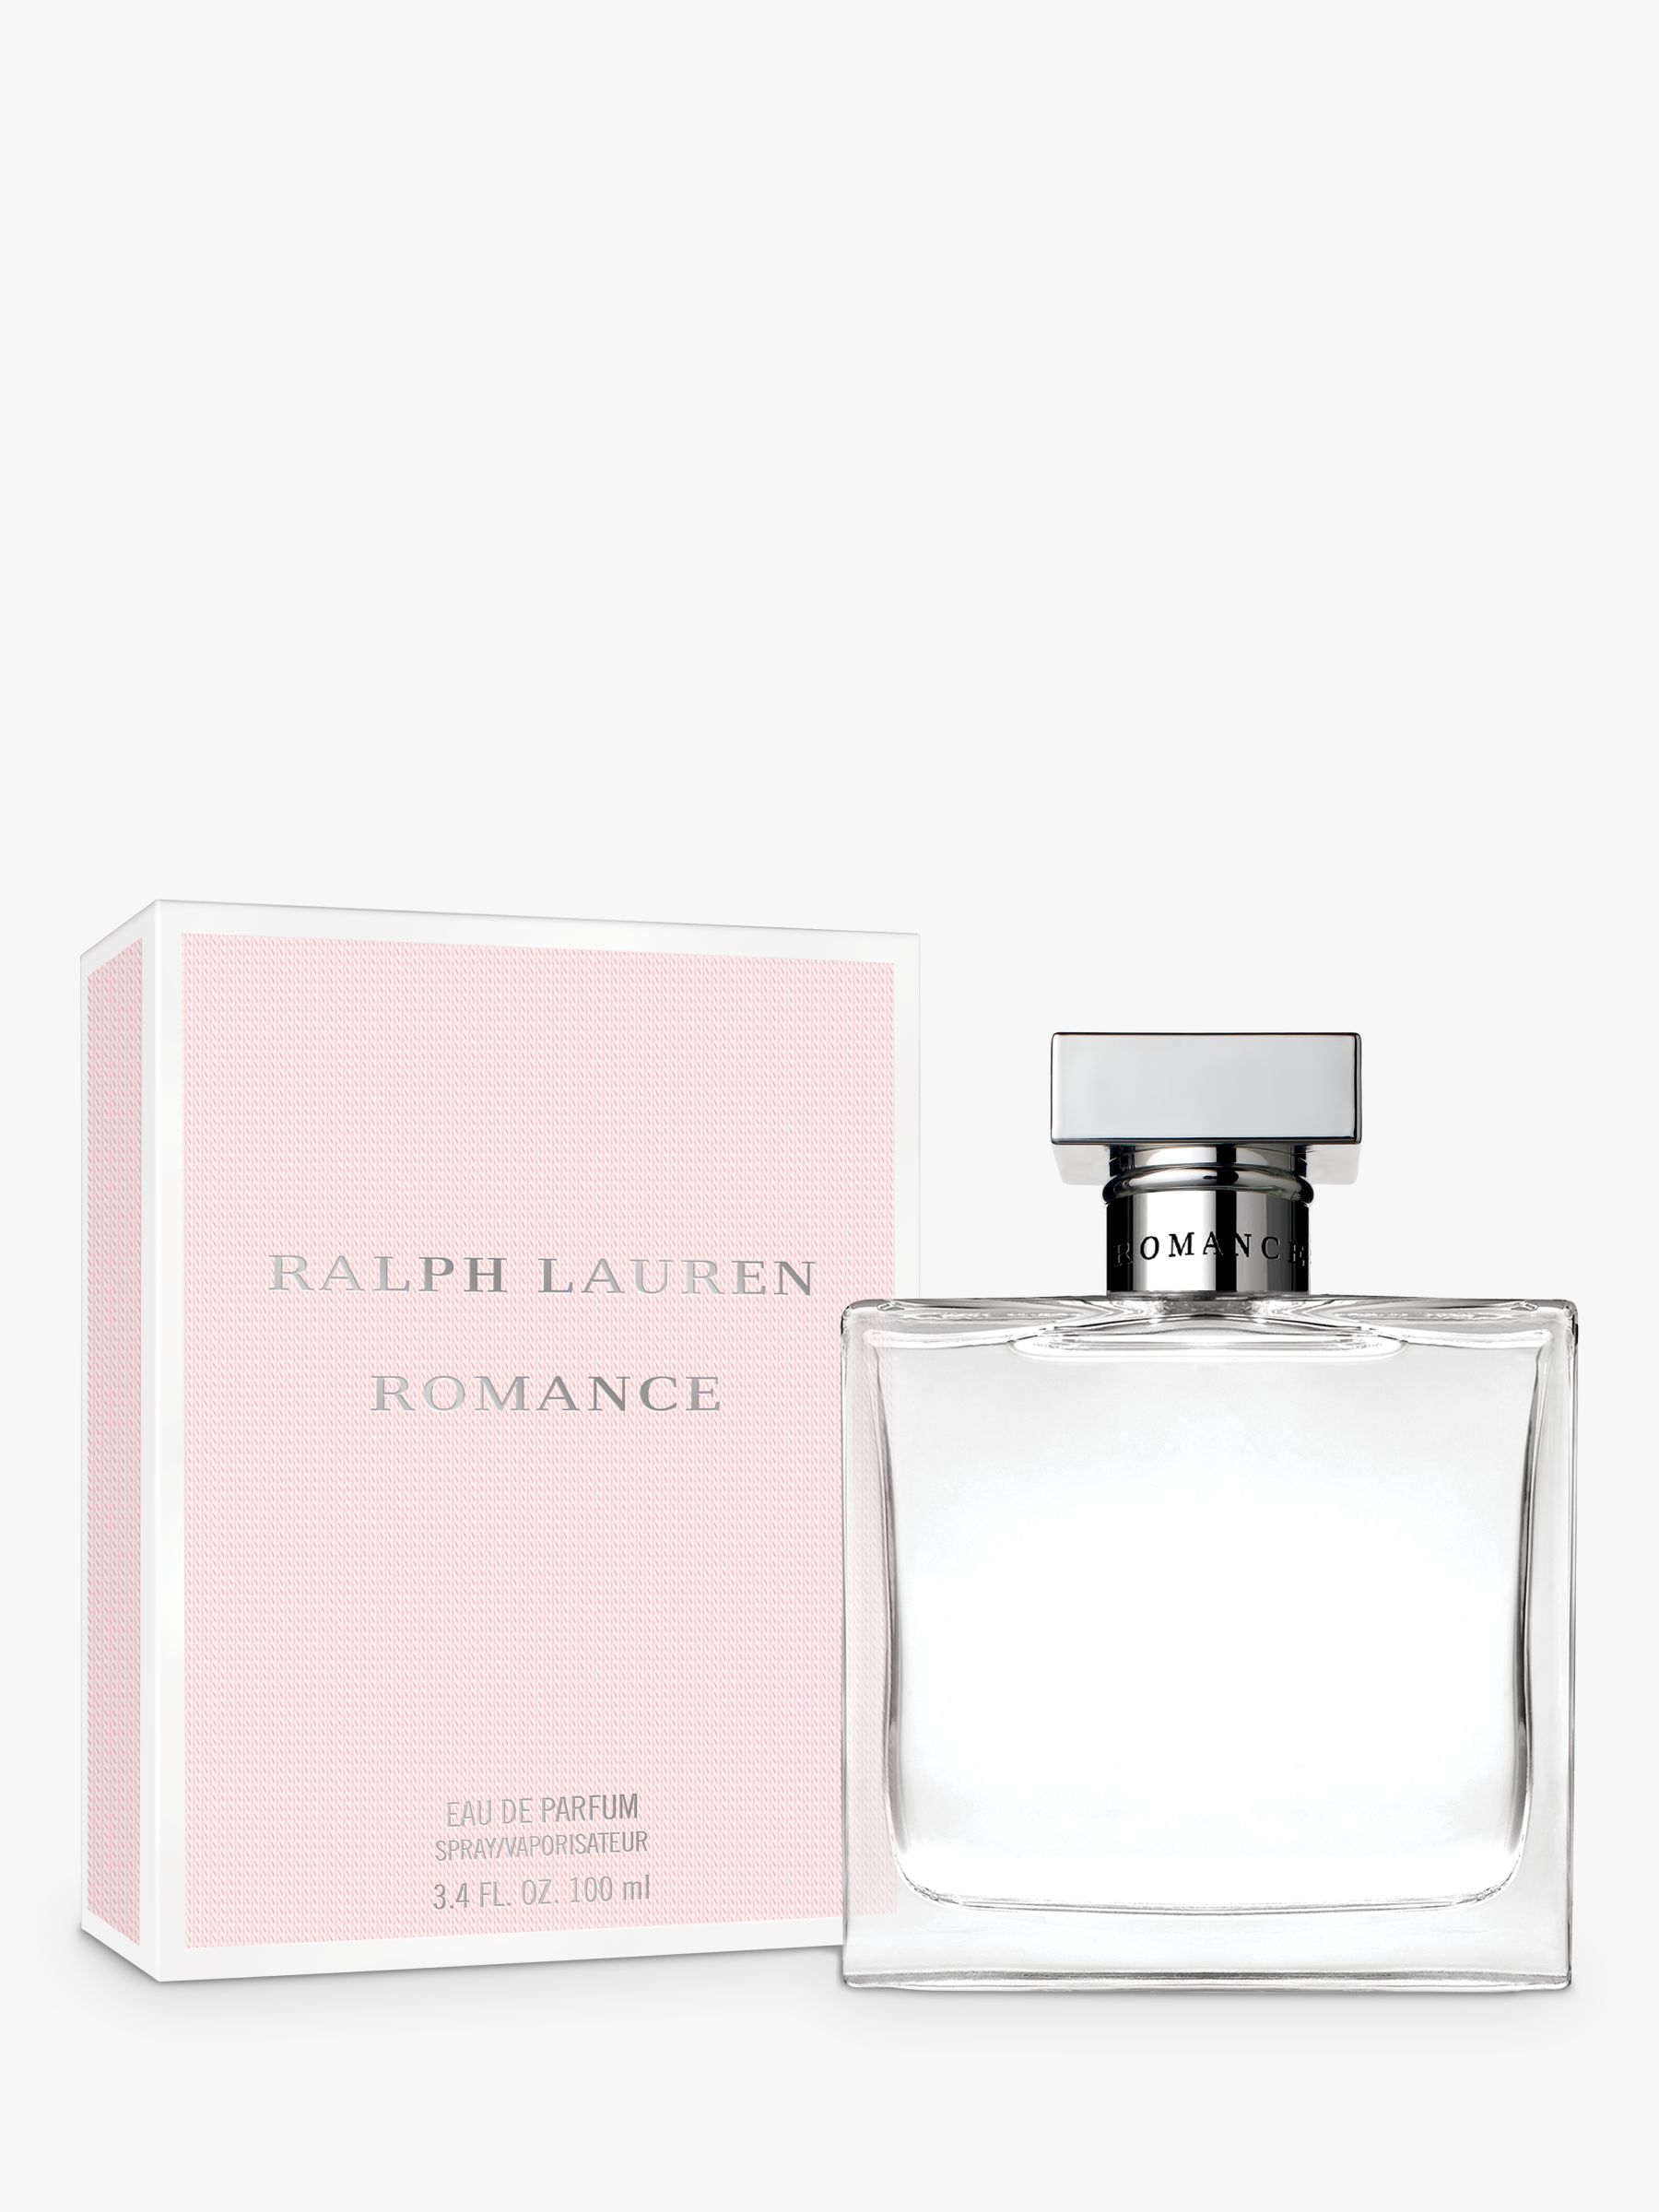 ralph lauren romance perfume price